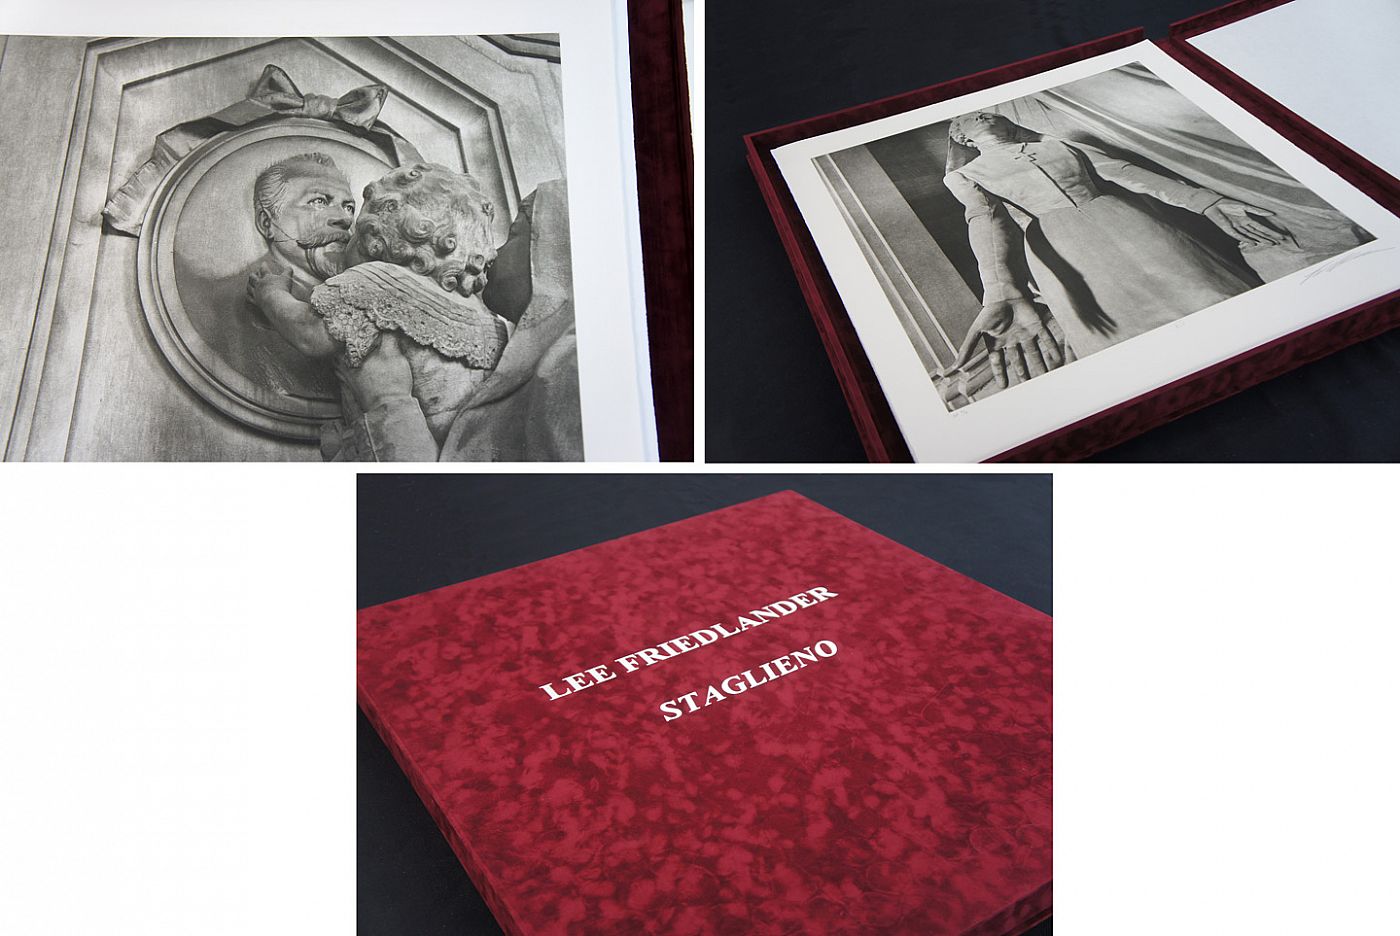 Lee Friedlander: Staglieno (Special Limited Edition Portfolio of 15 Photogravure Prints)